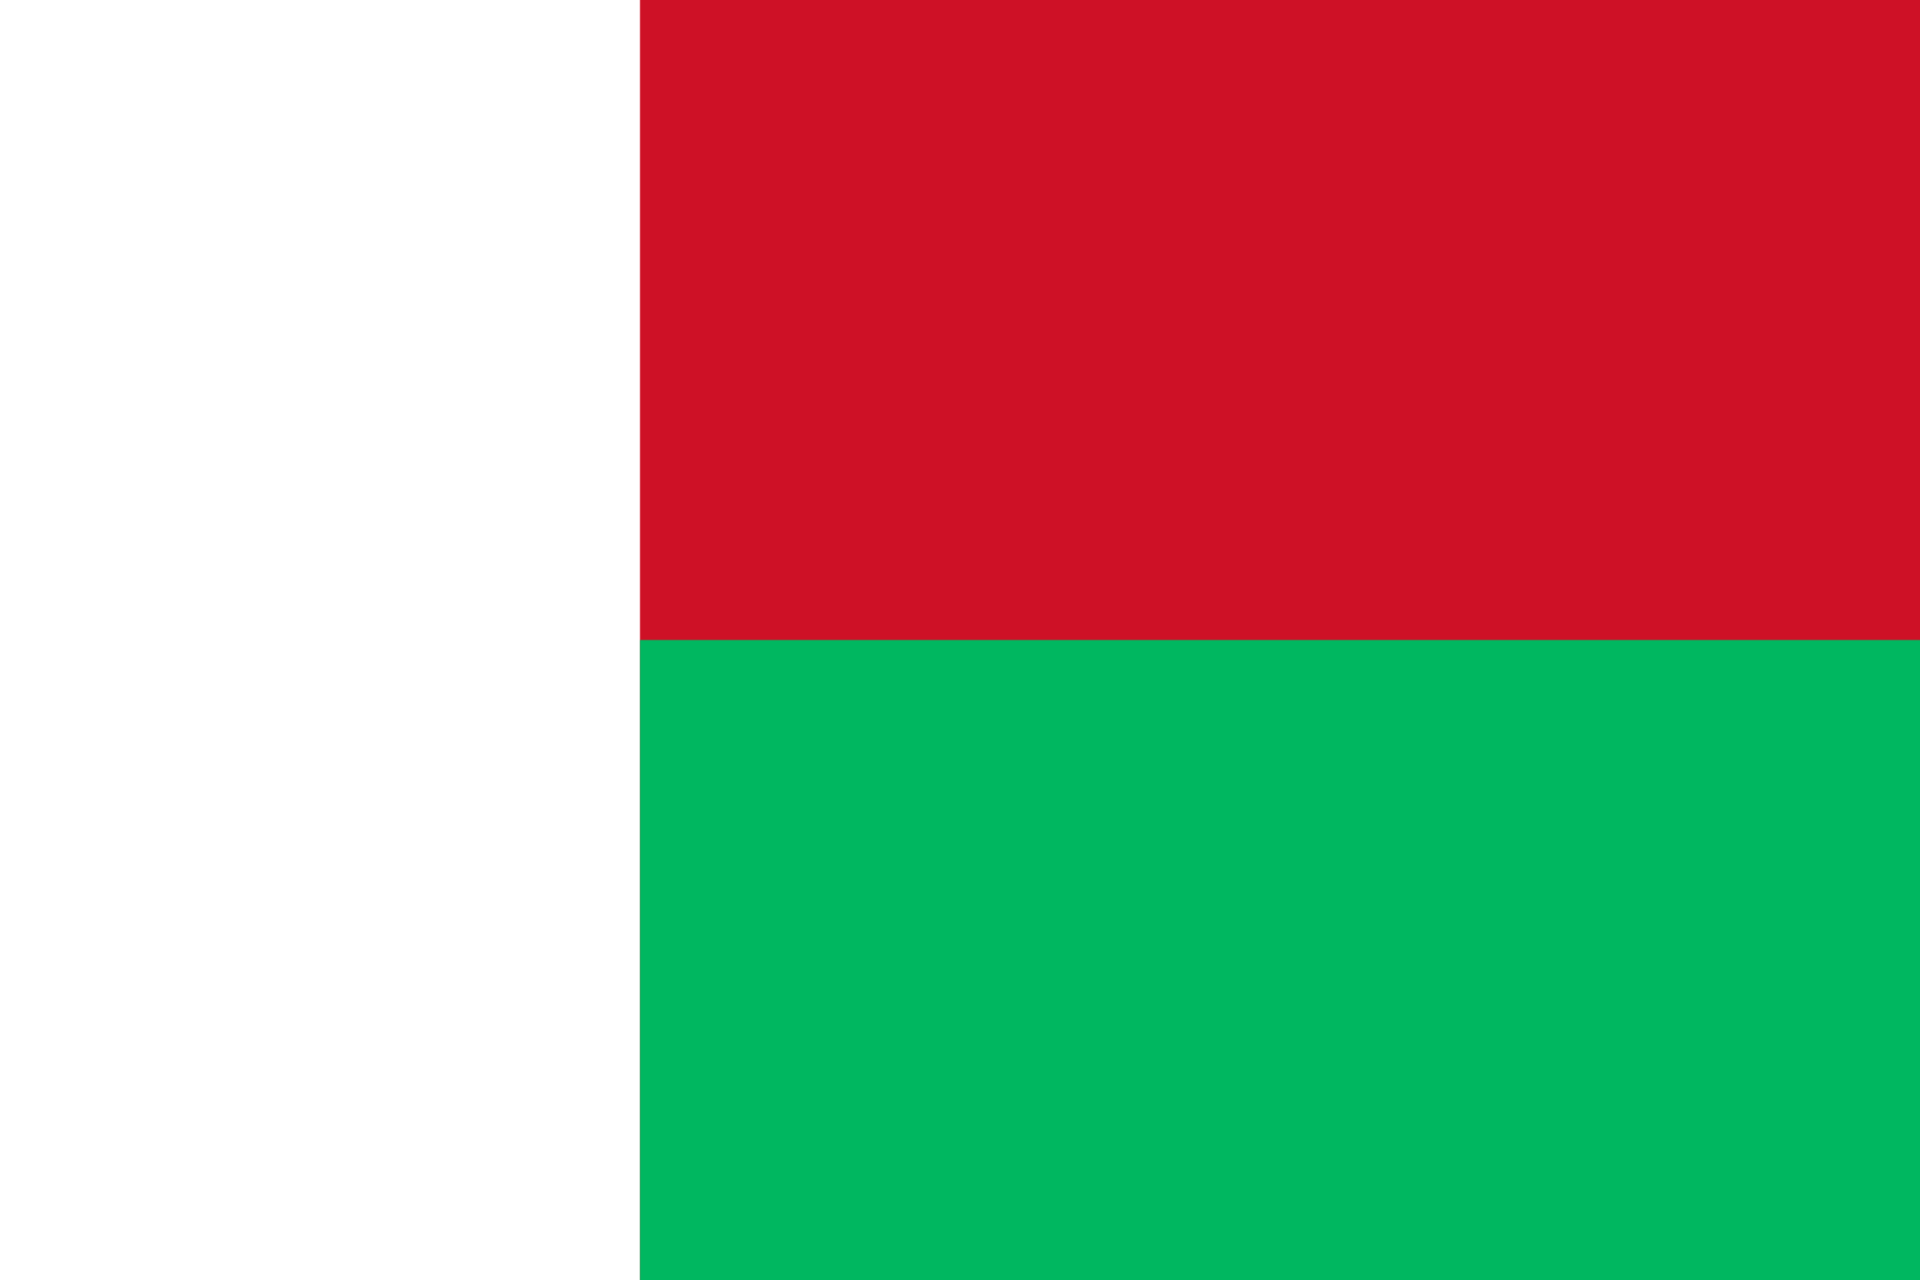 Madagascar Republic flag